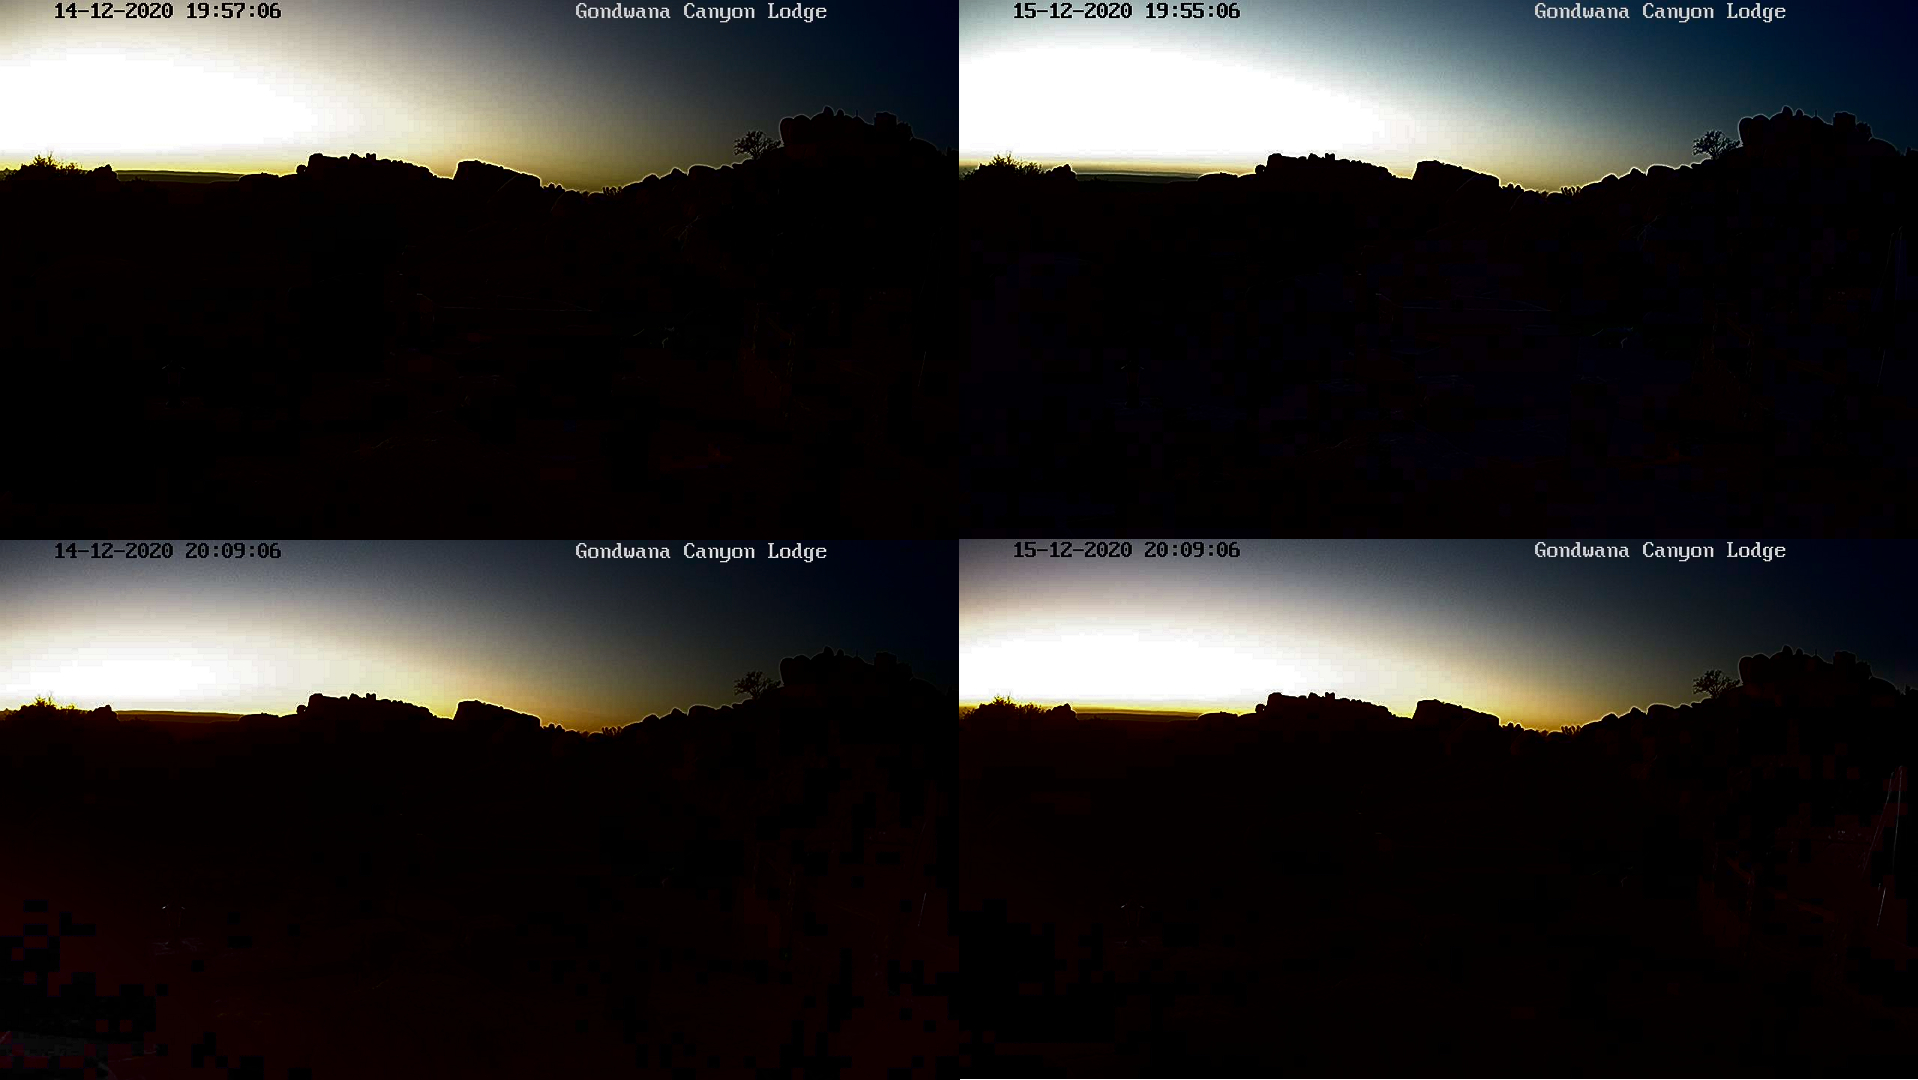 Gondwana Canyon Lodge, solar eclipse below the horizon Dec, 2020 4